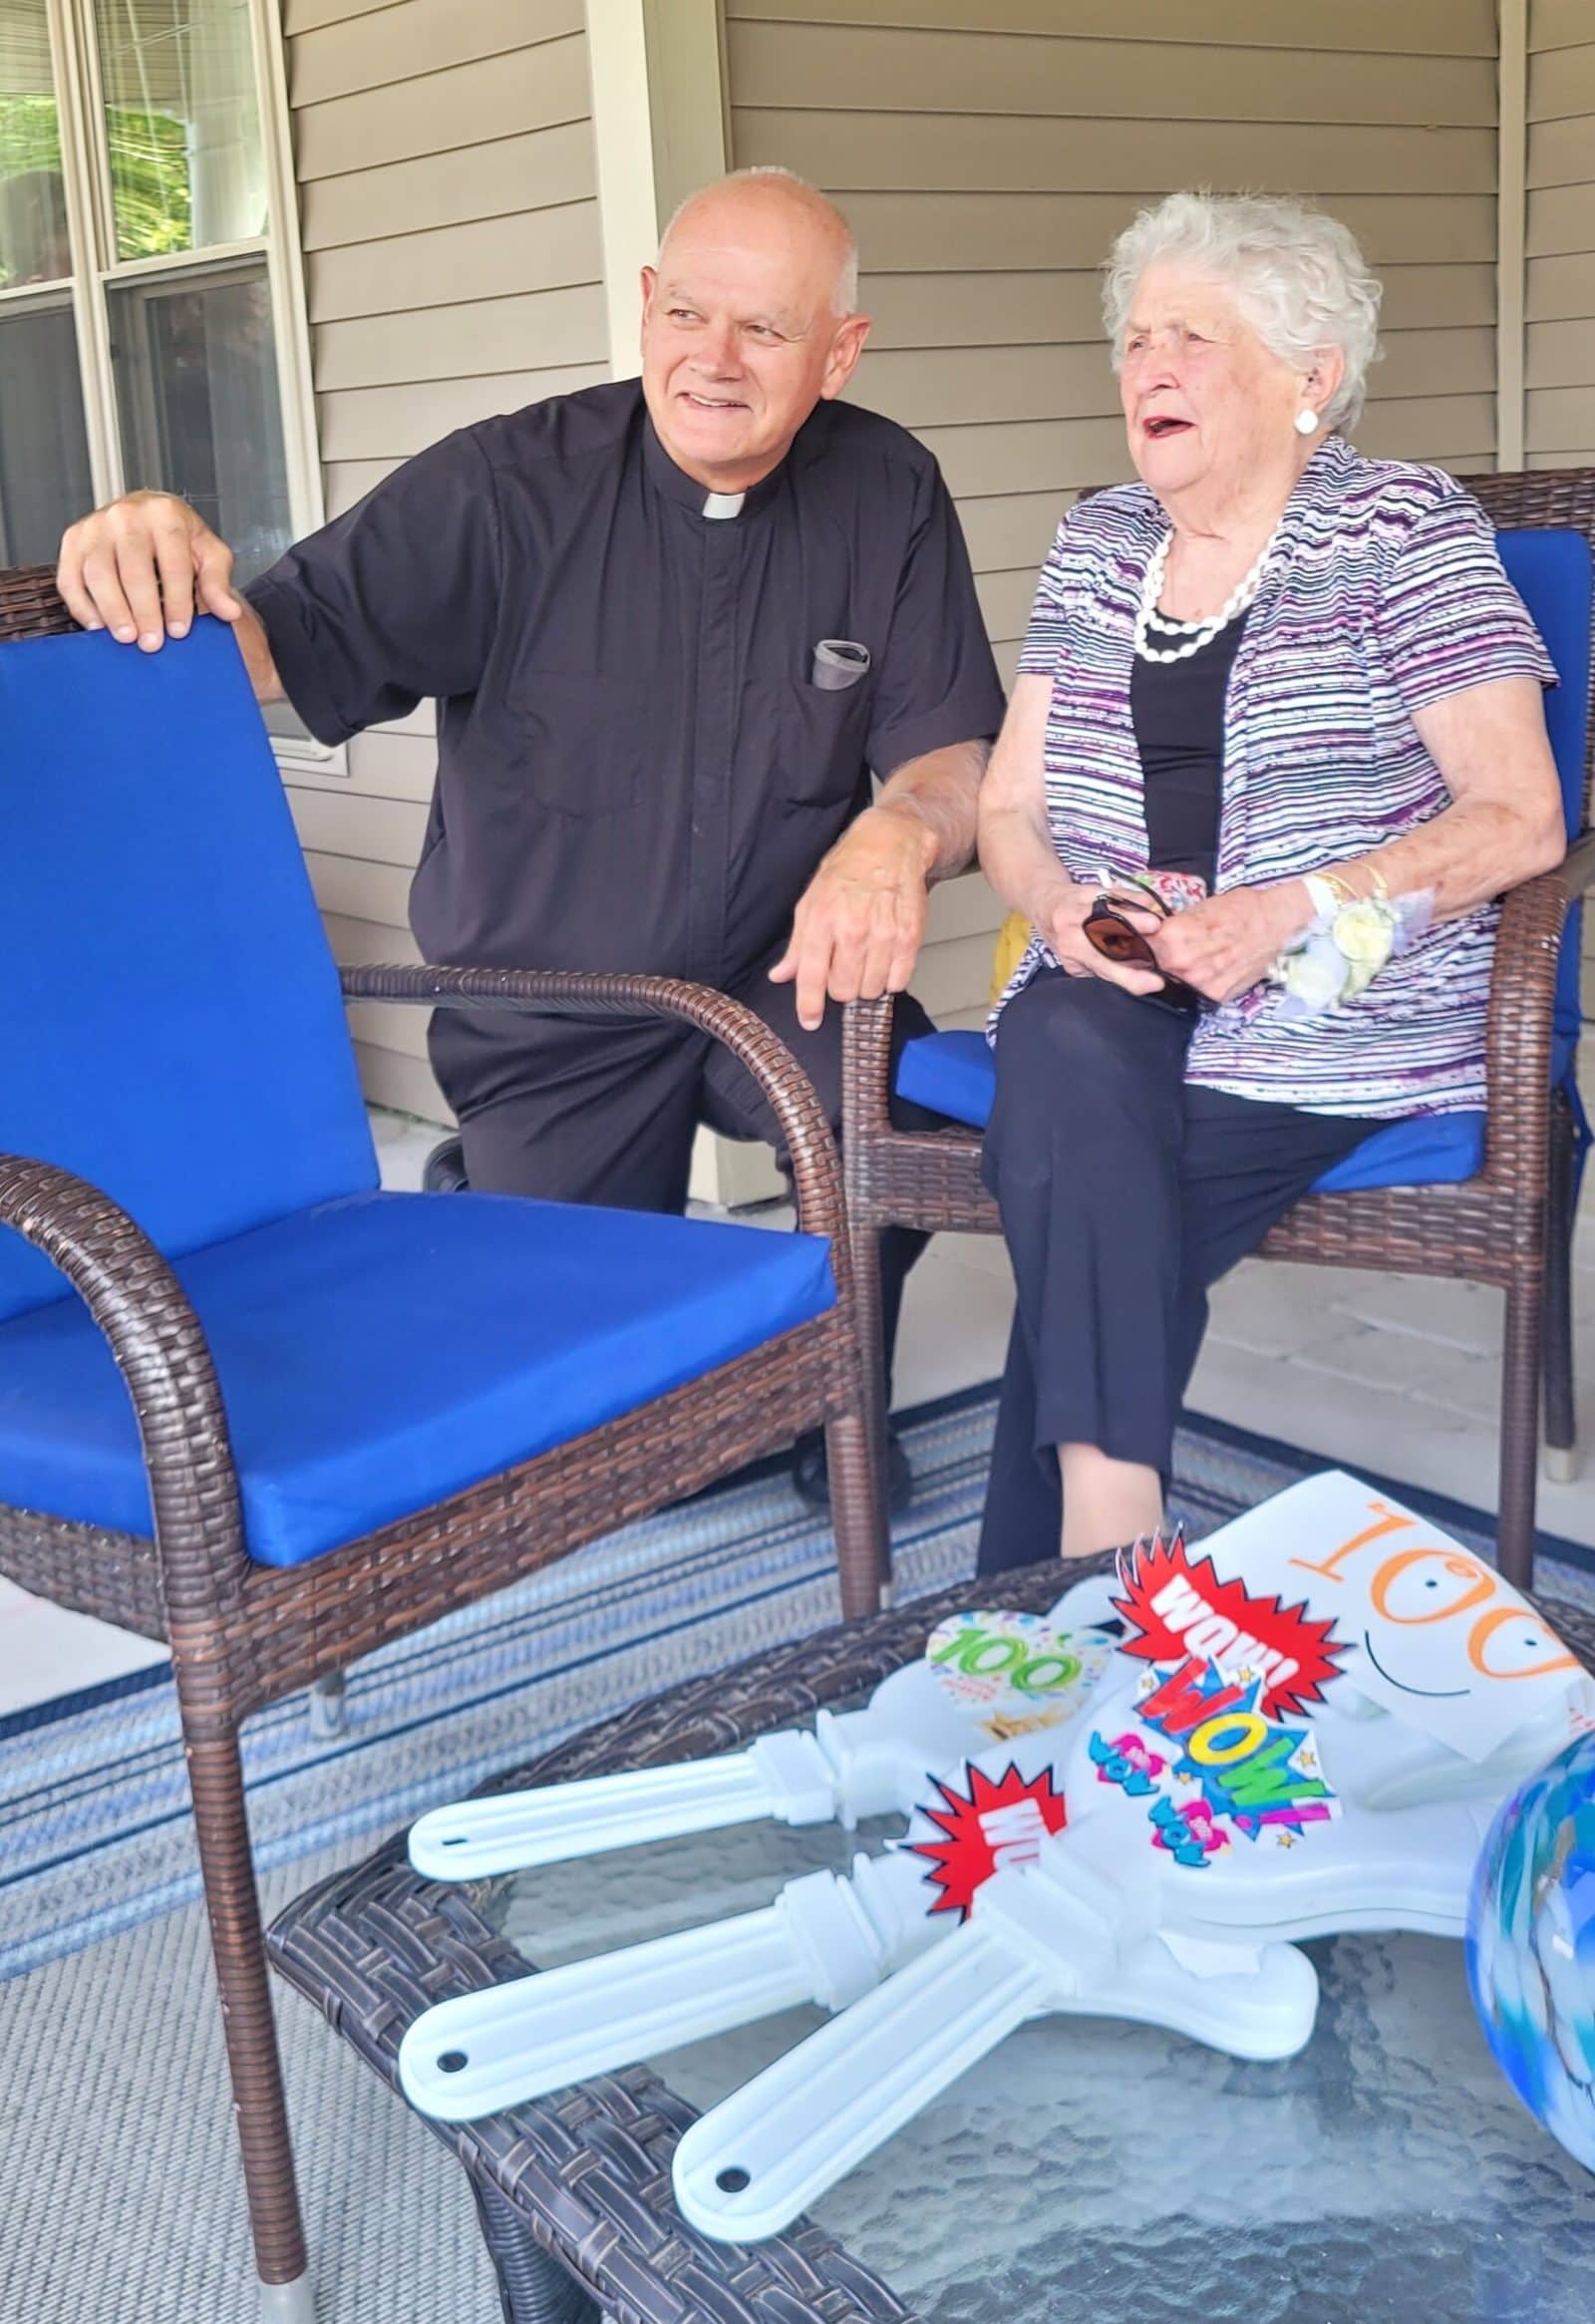 Lifelong resident celebrates 100th birthday in Westborough